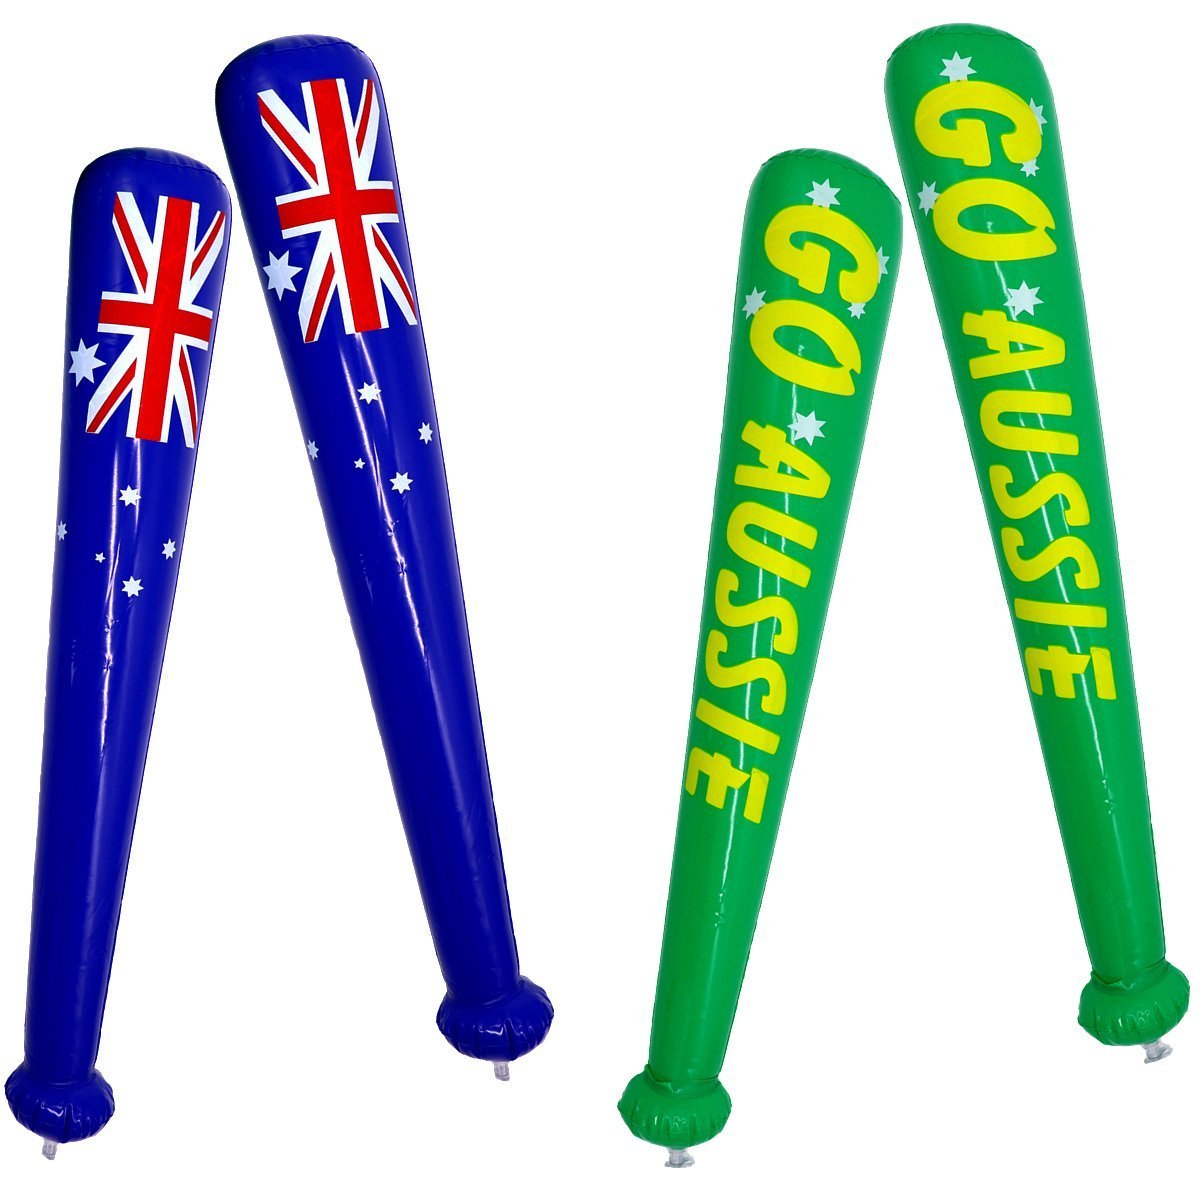 2 Australia Aussie Day Blowup Inflatable Thunder Sticks Australian Souvenir Flag - Zmart Australia